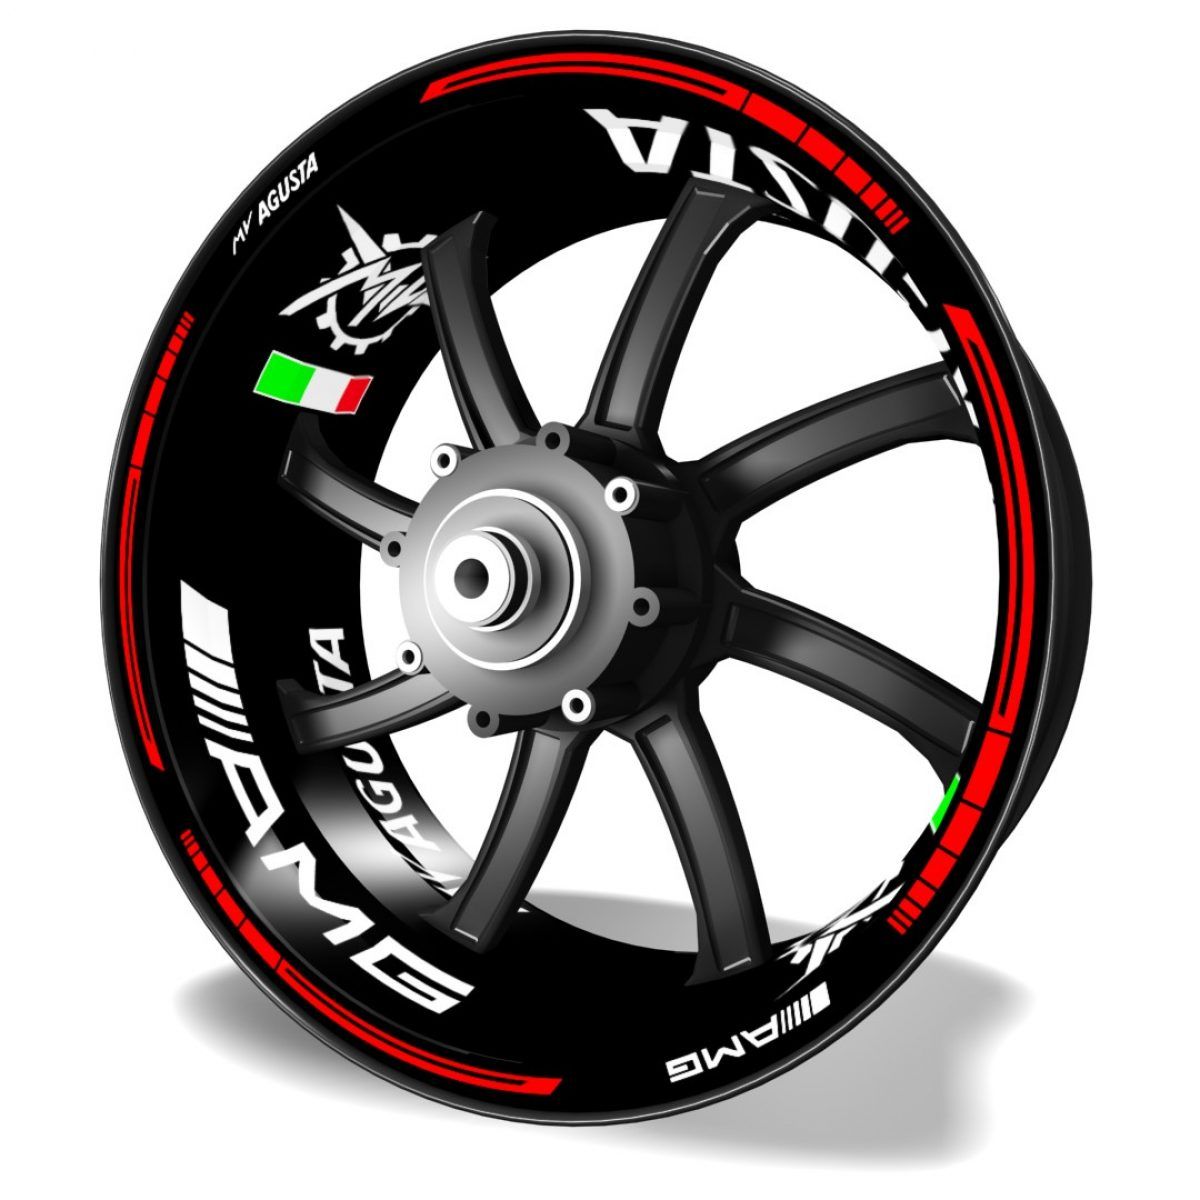 Racing 4 stickers wheel Adesivi ruote moto strisce cerchi per MV Agusta F4 Mod 